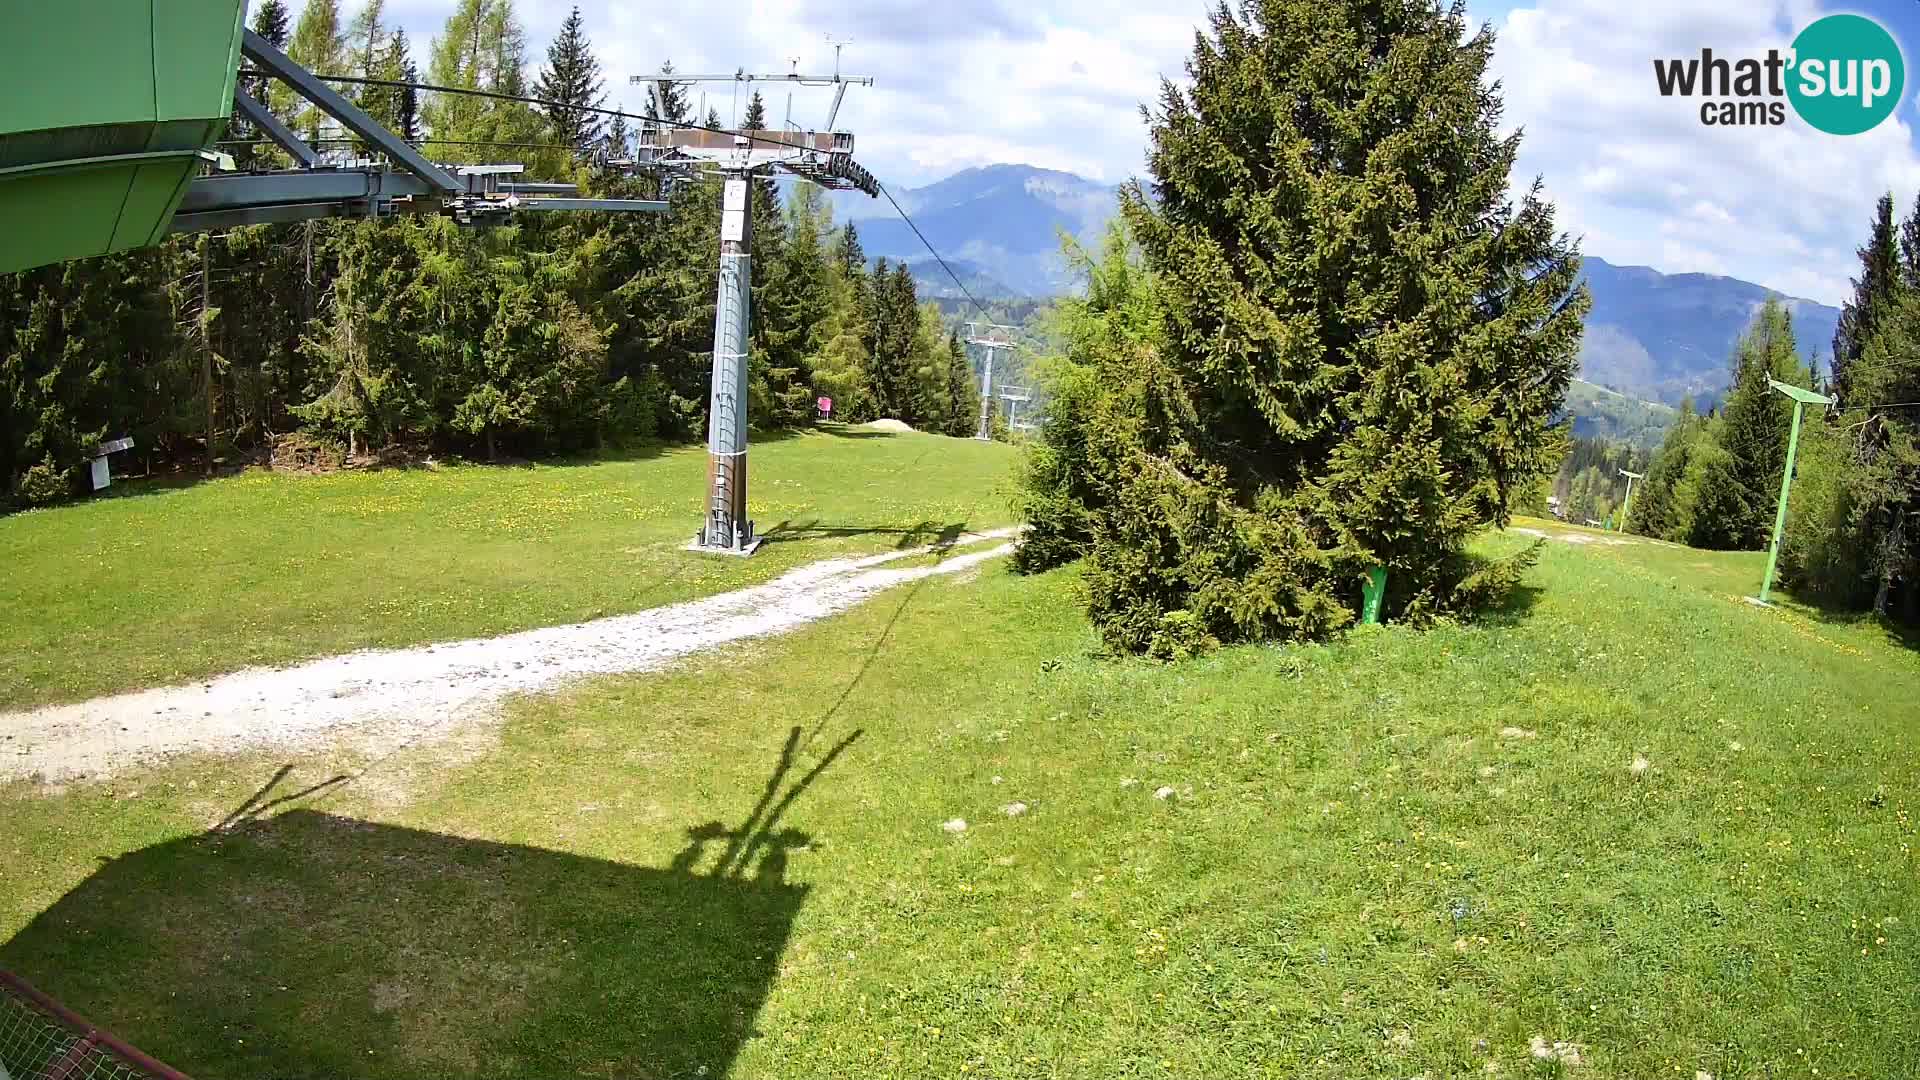 Cámara en vivo Estación de esquí de Cerkno Lom – Eslovenia